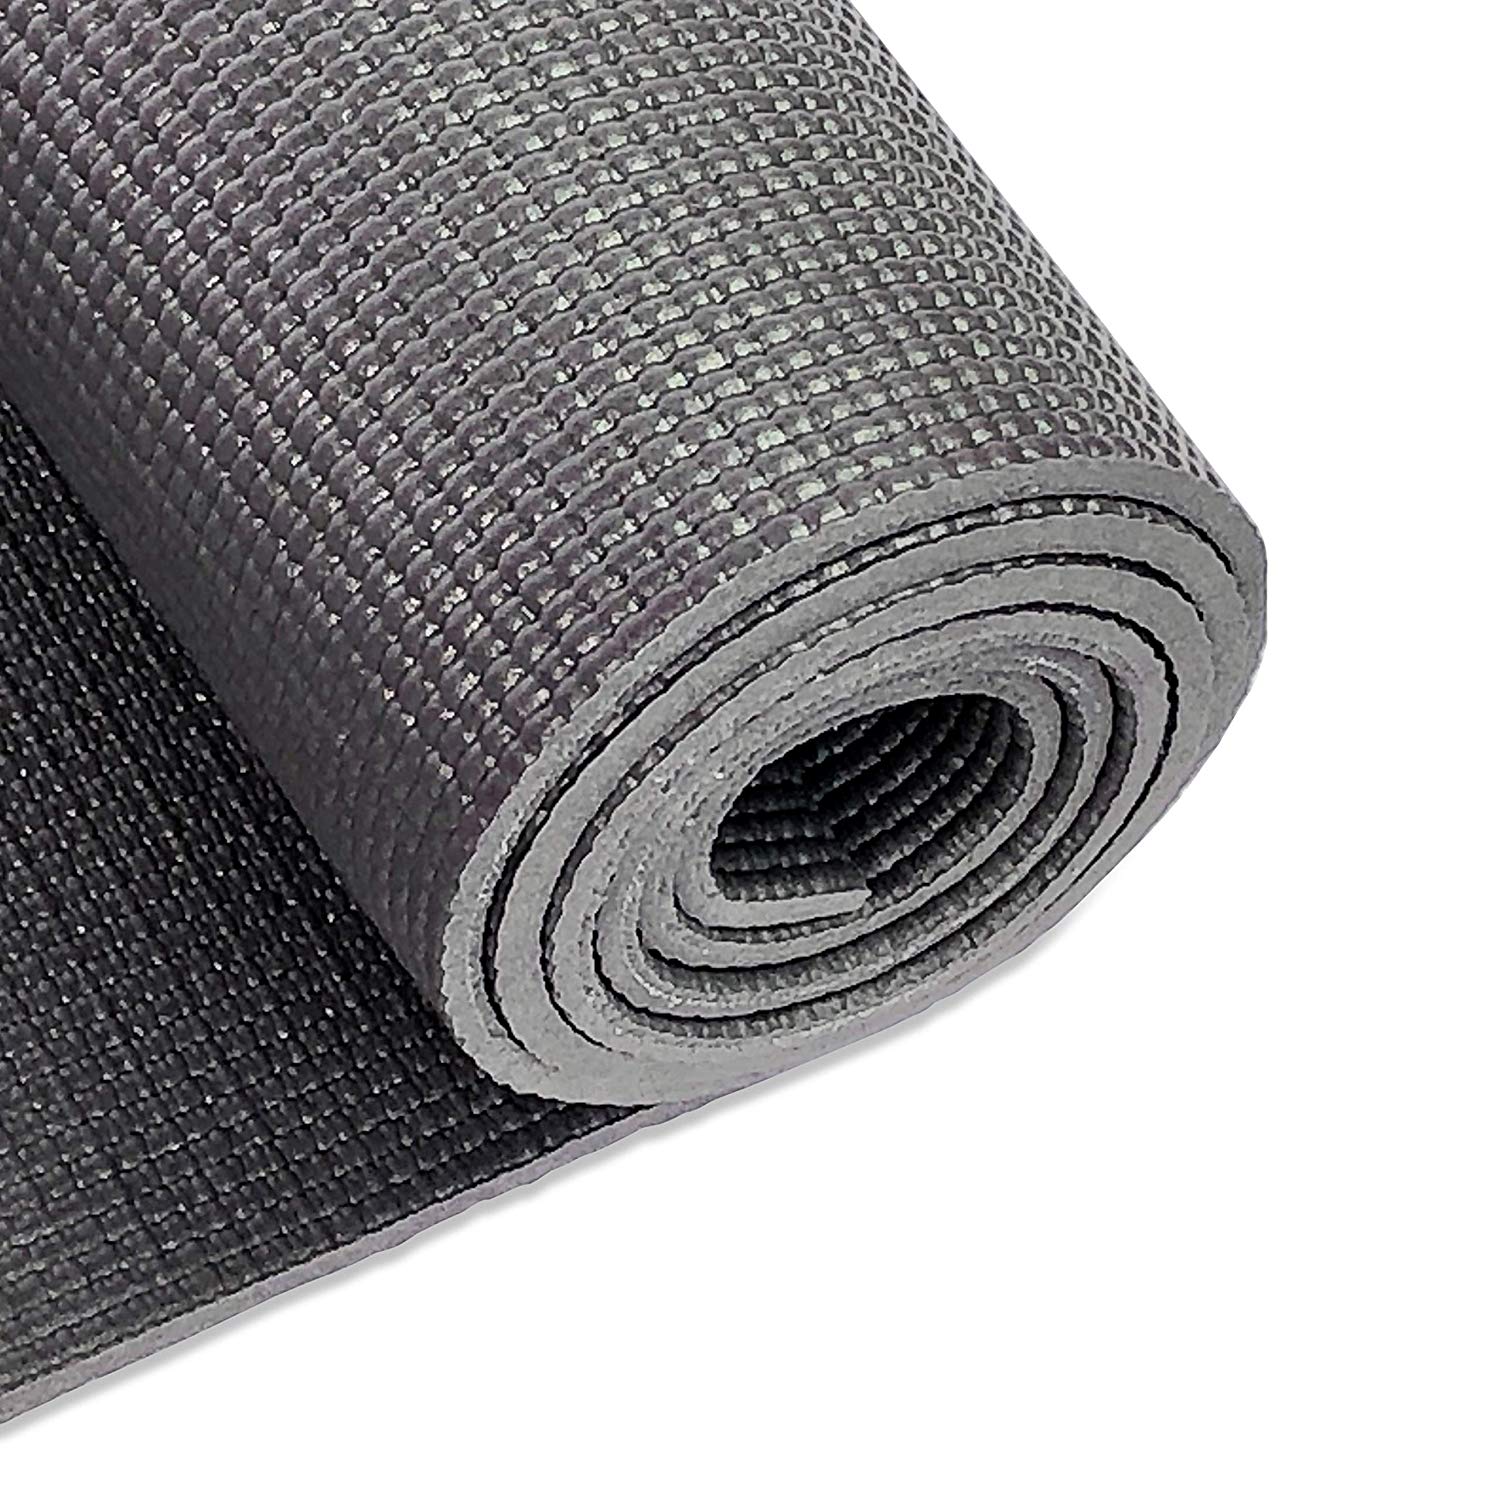 RatMat Printed Yoga Mat: Eco-friendly, nontoxic foam construction.  Extra-thick and durable. 24 x 68 x ¼